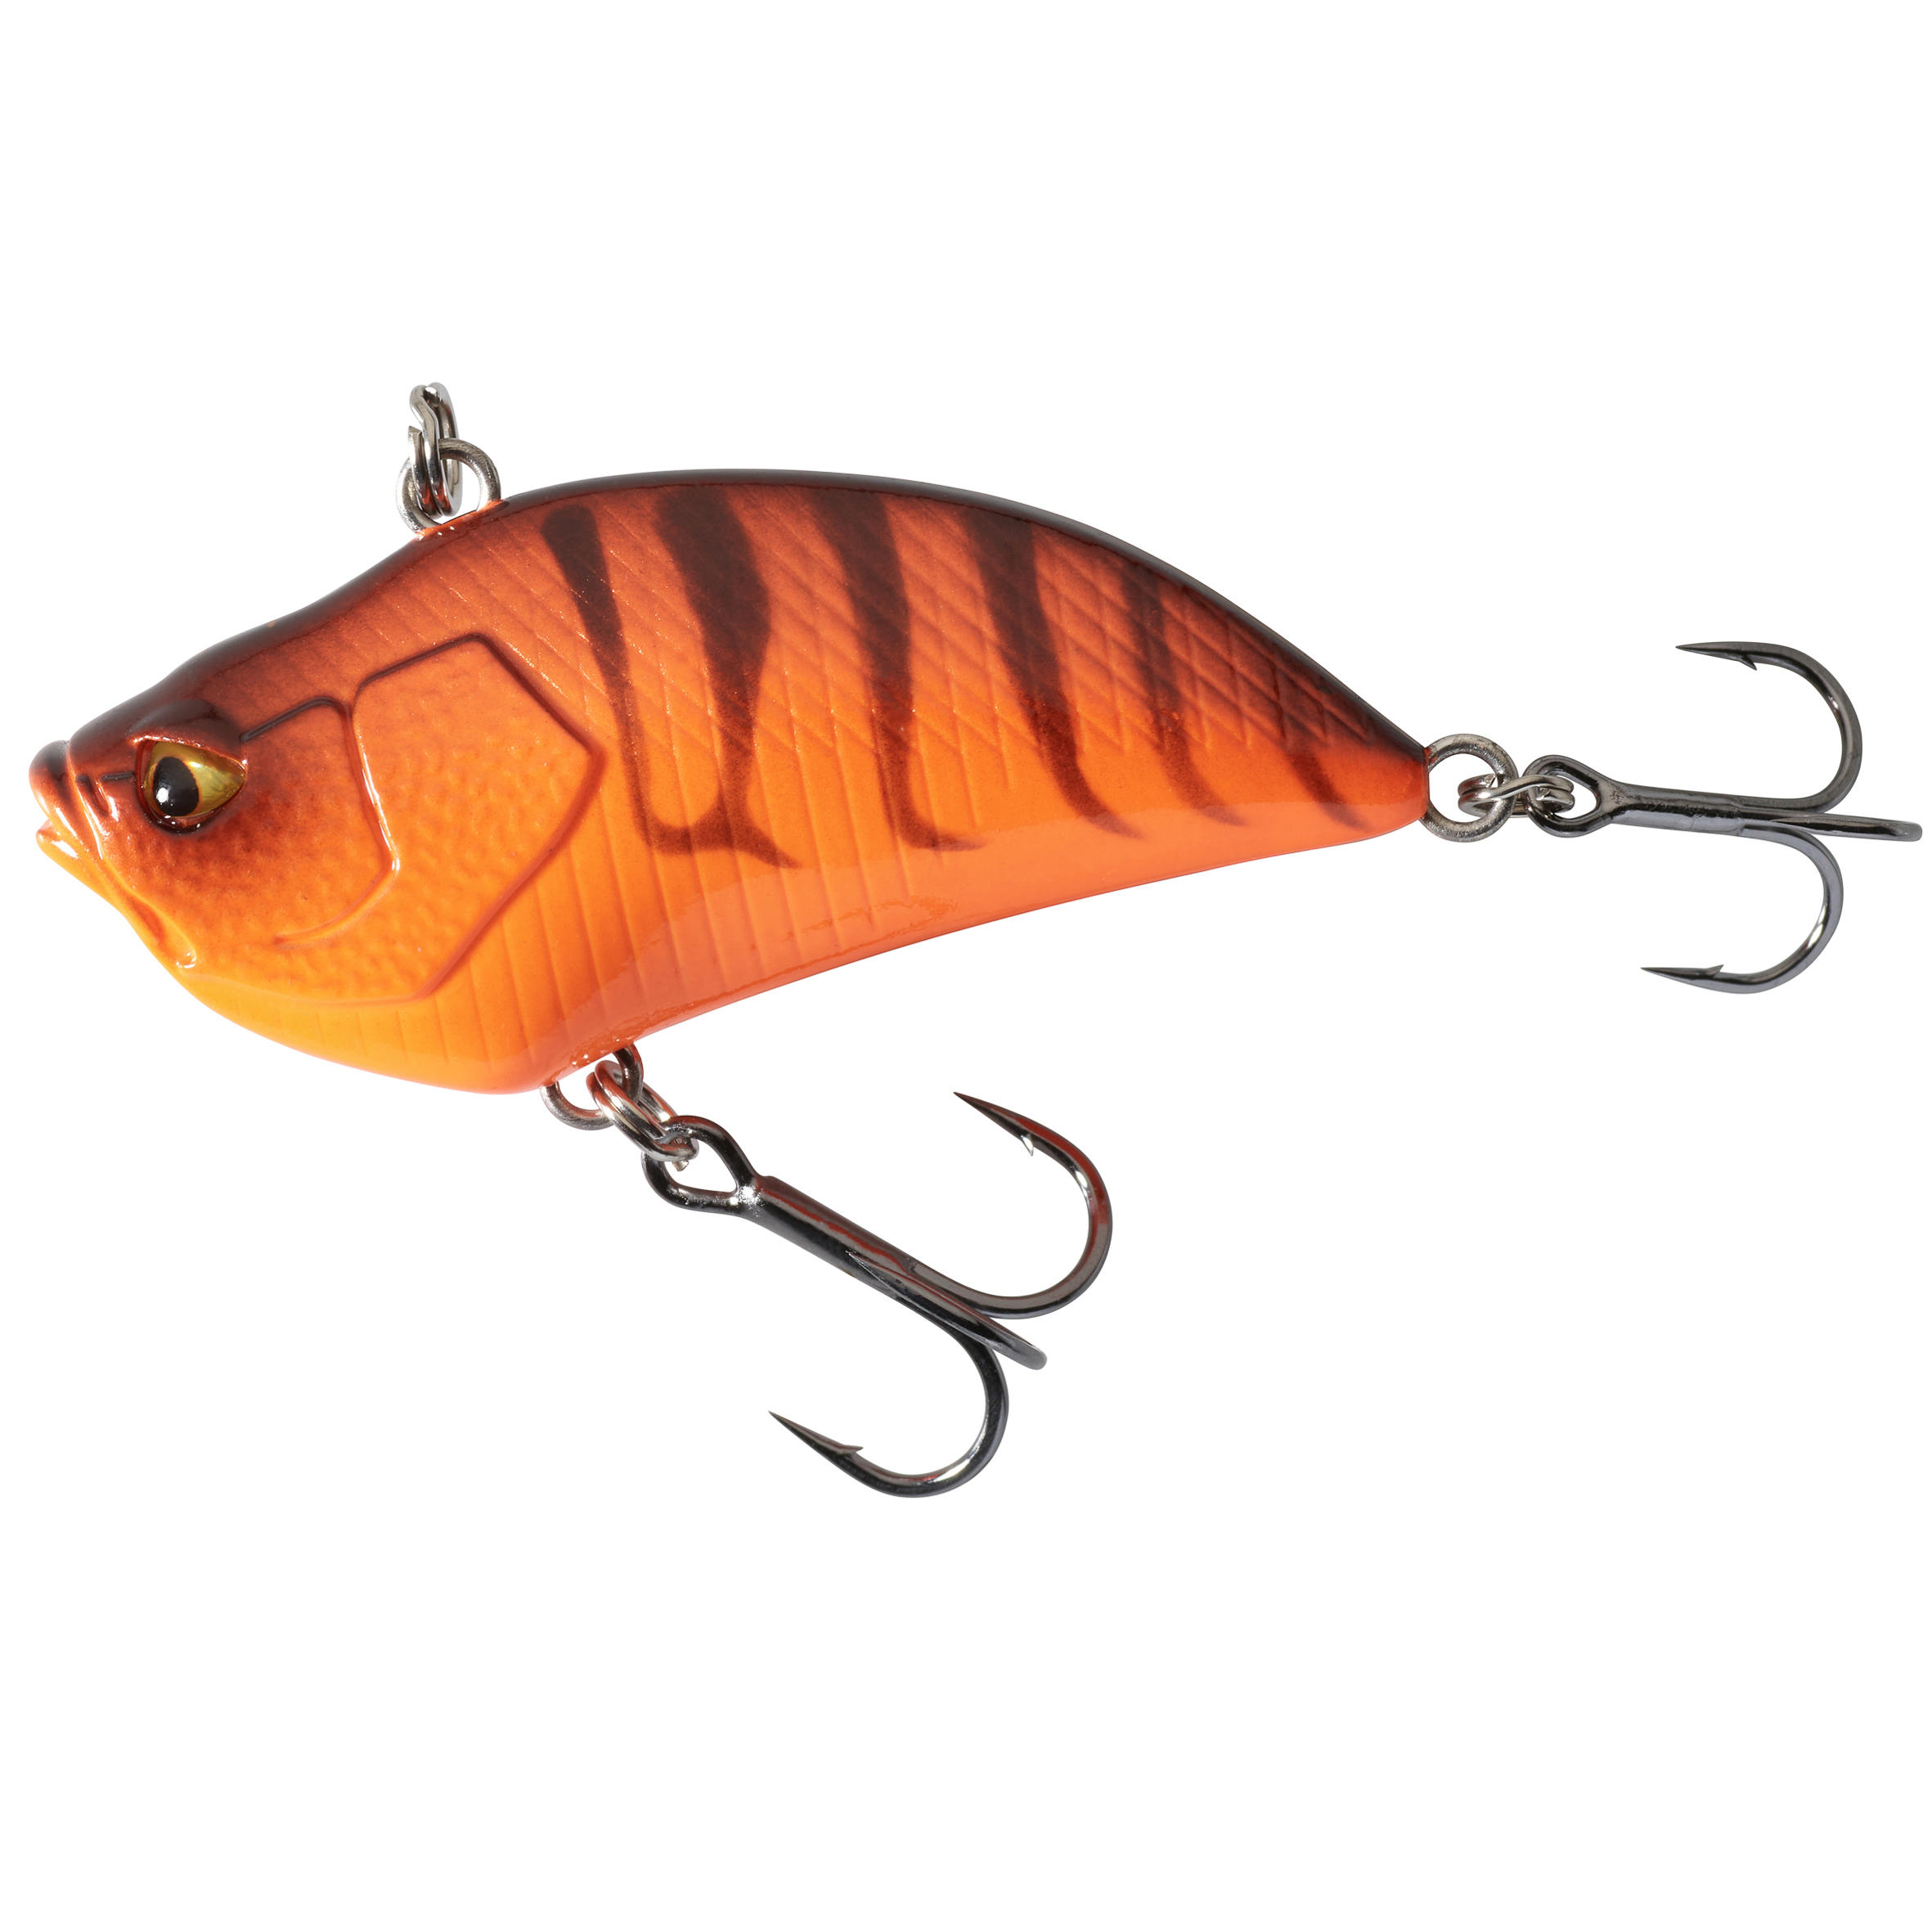 PLUG BAIT LIPLESS FISHING LURE VBN 50 S CRAYFISH - Fluo orange